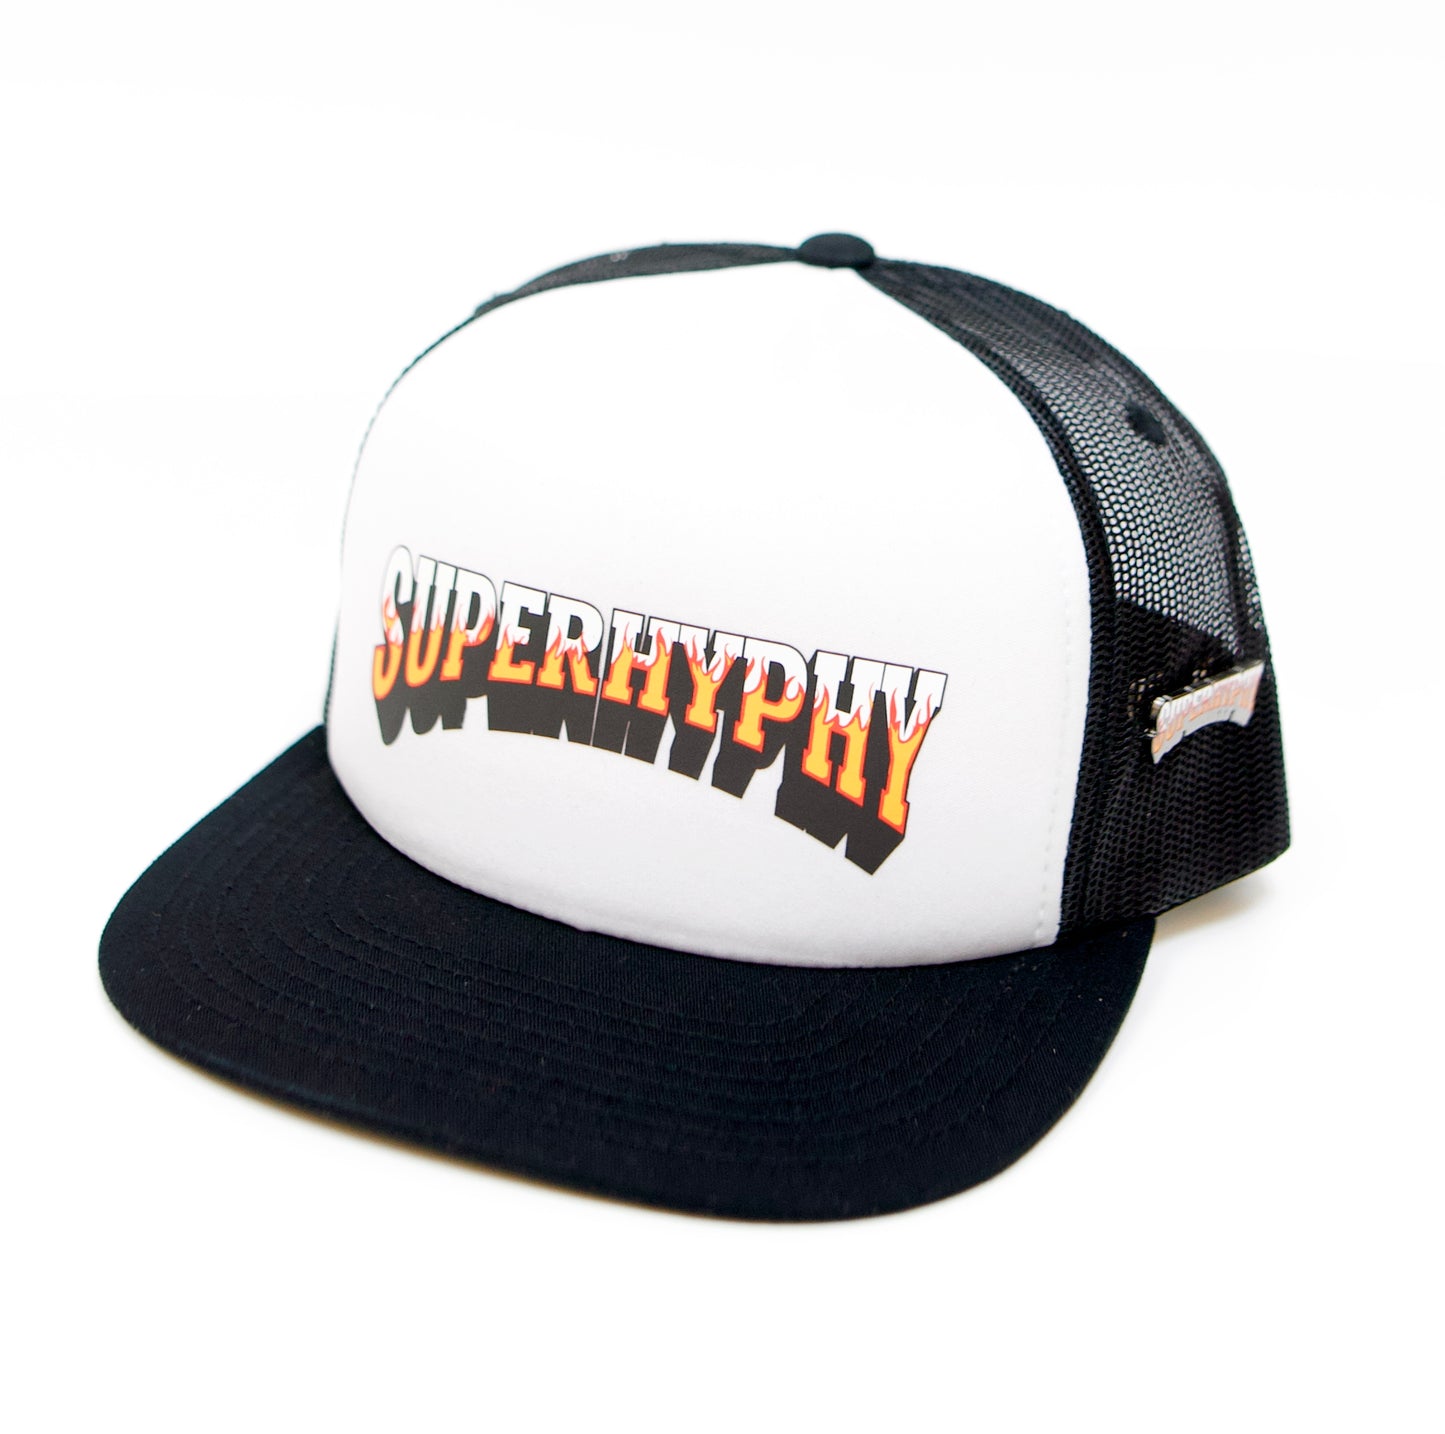 Black “Superhyphy” Trucker Cap